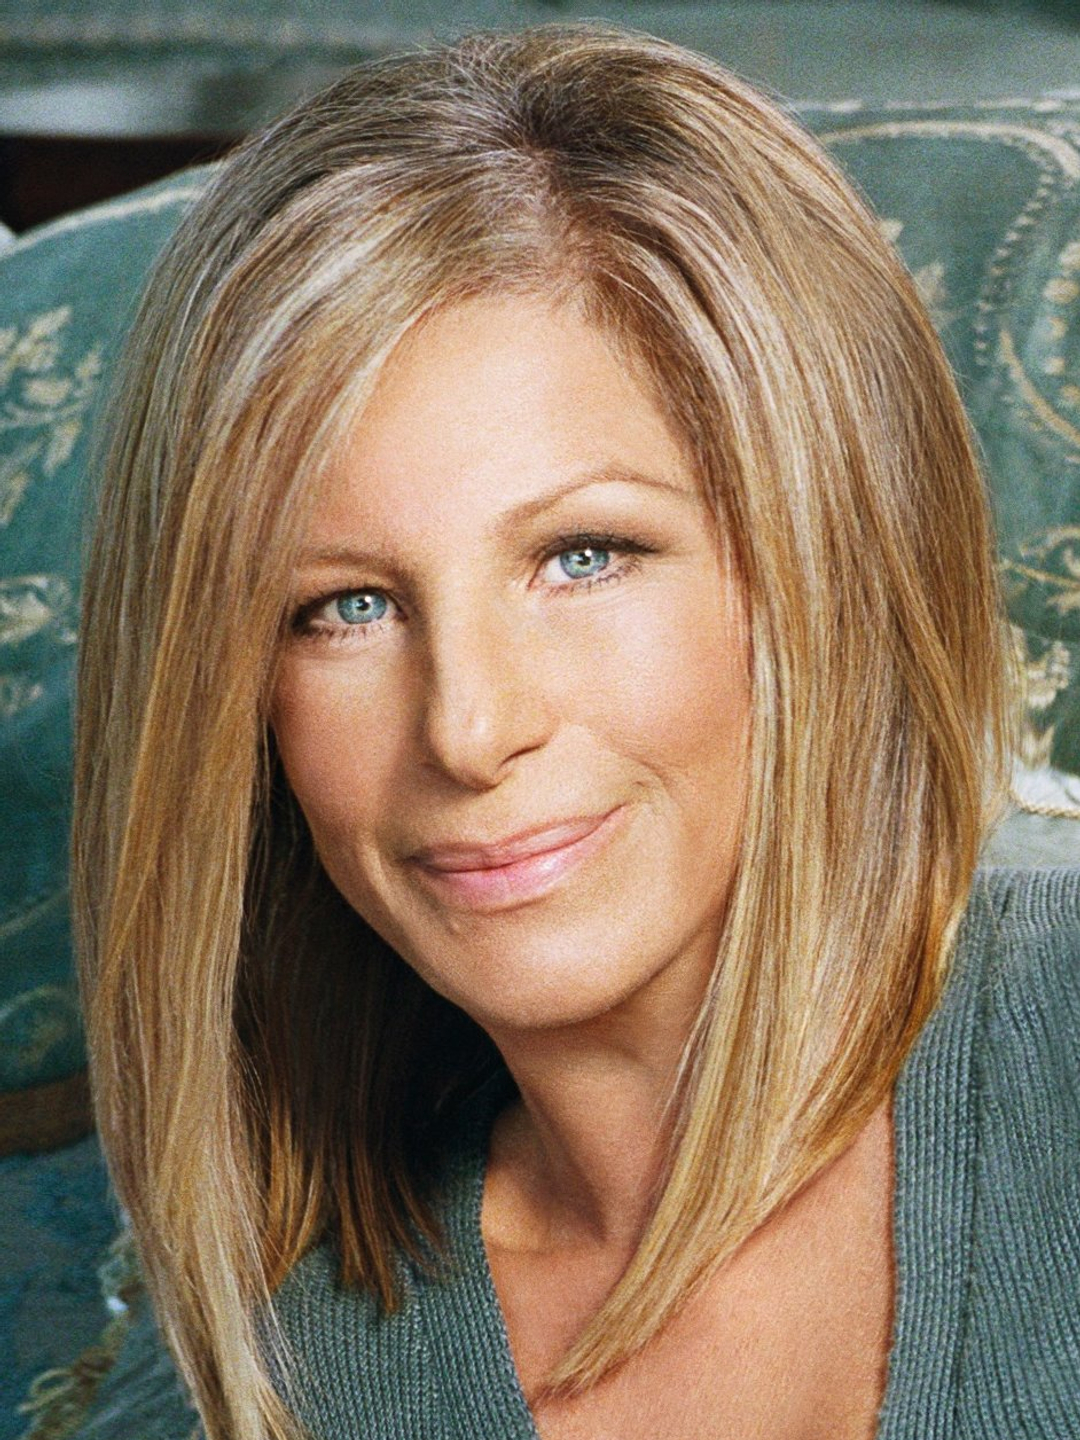 Barbra Streisand in her youth